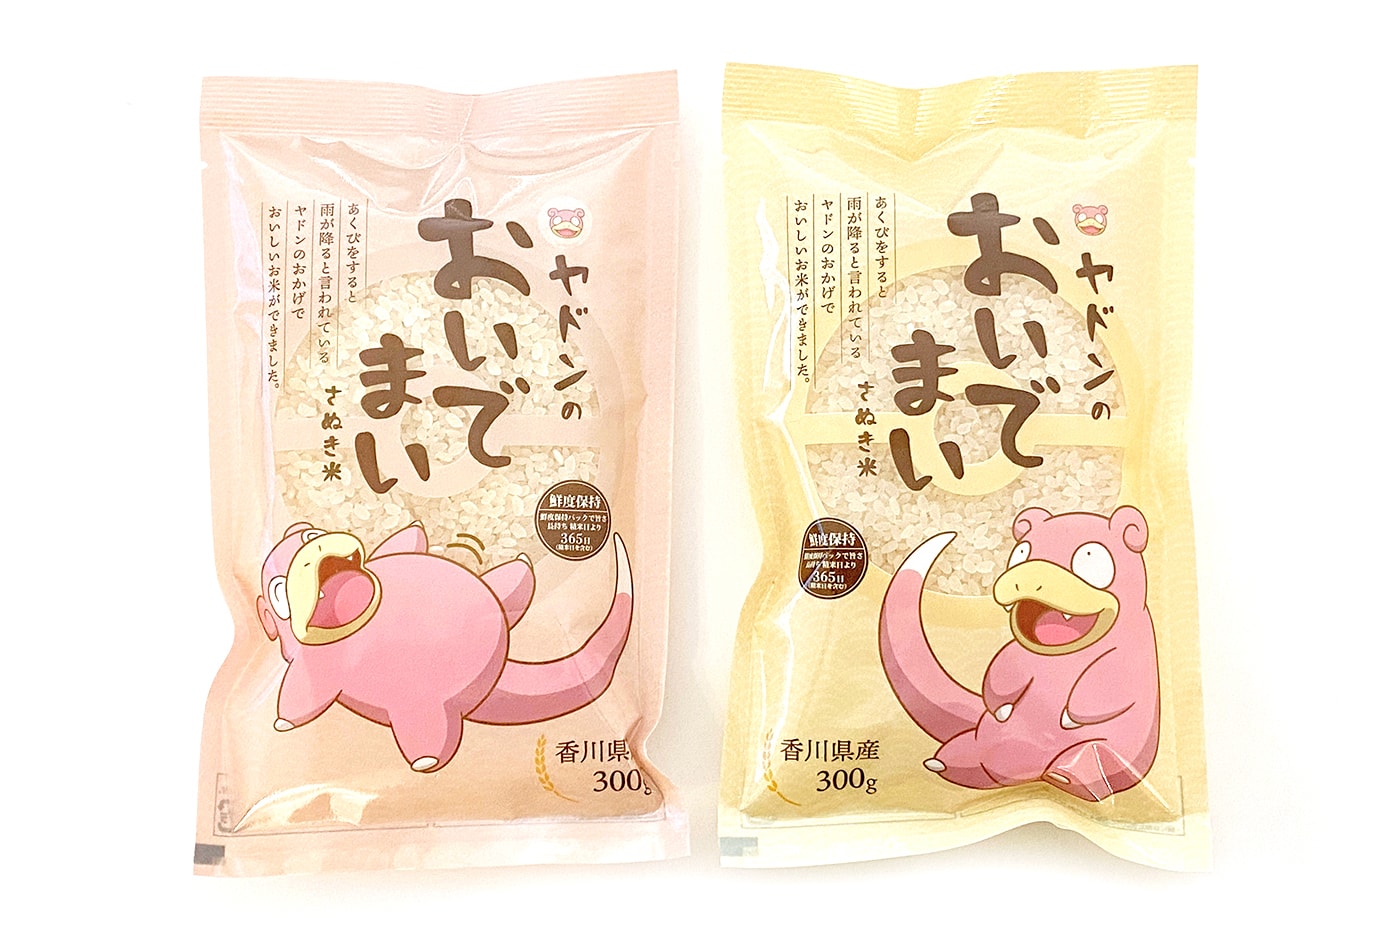 Slowpoke Kagawa Prefecture Pokémon Ambassador keychains rice Curry udon spice yudon pokemon 25th anniversary Japan food snacks collectibles 